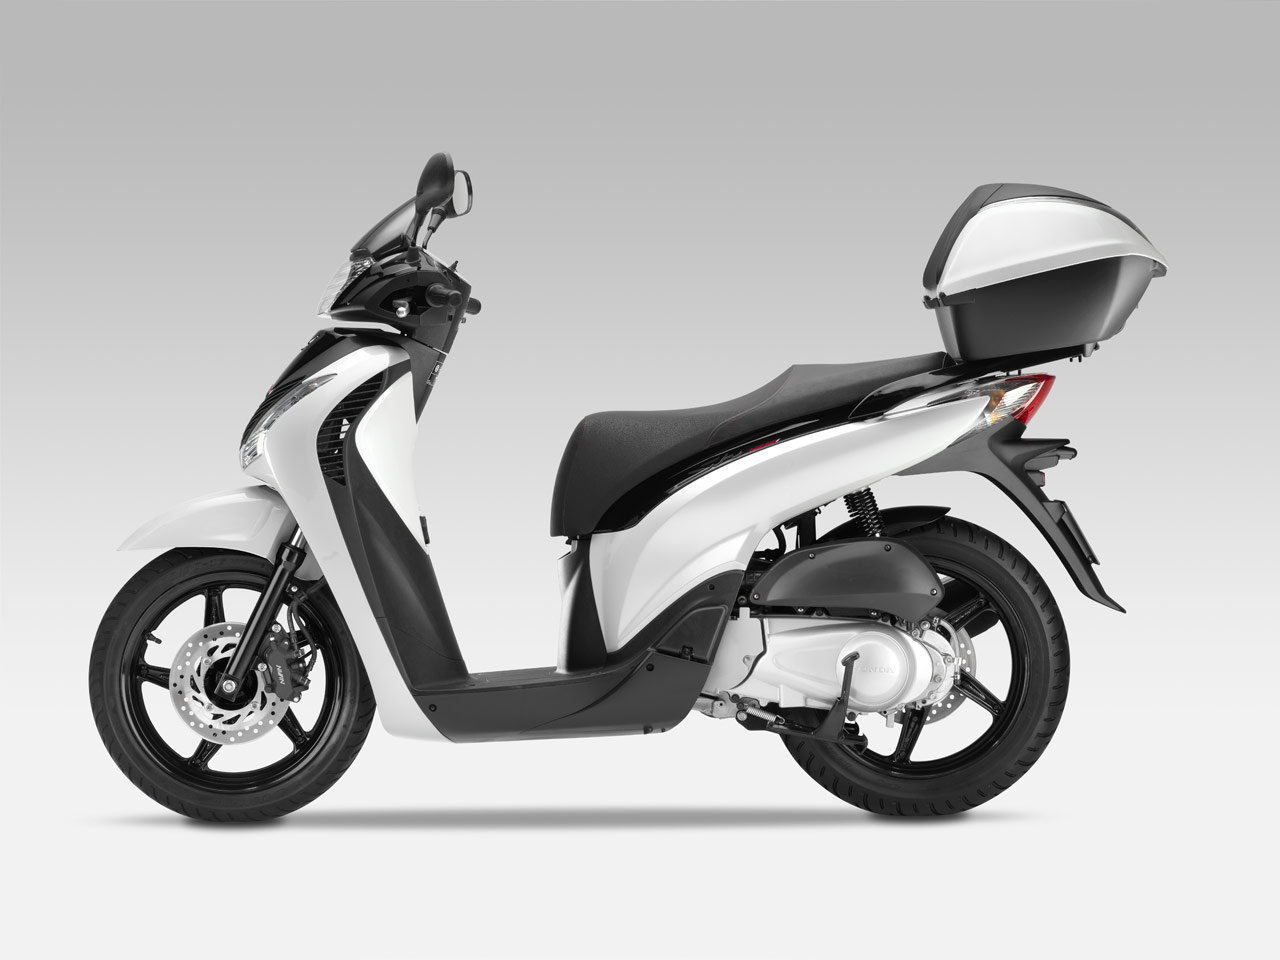 Listino Honda SH150i ABS Scooter 150-300 - image 14710_honda-sh150isporty on https://moto.motori.net